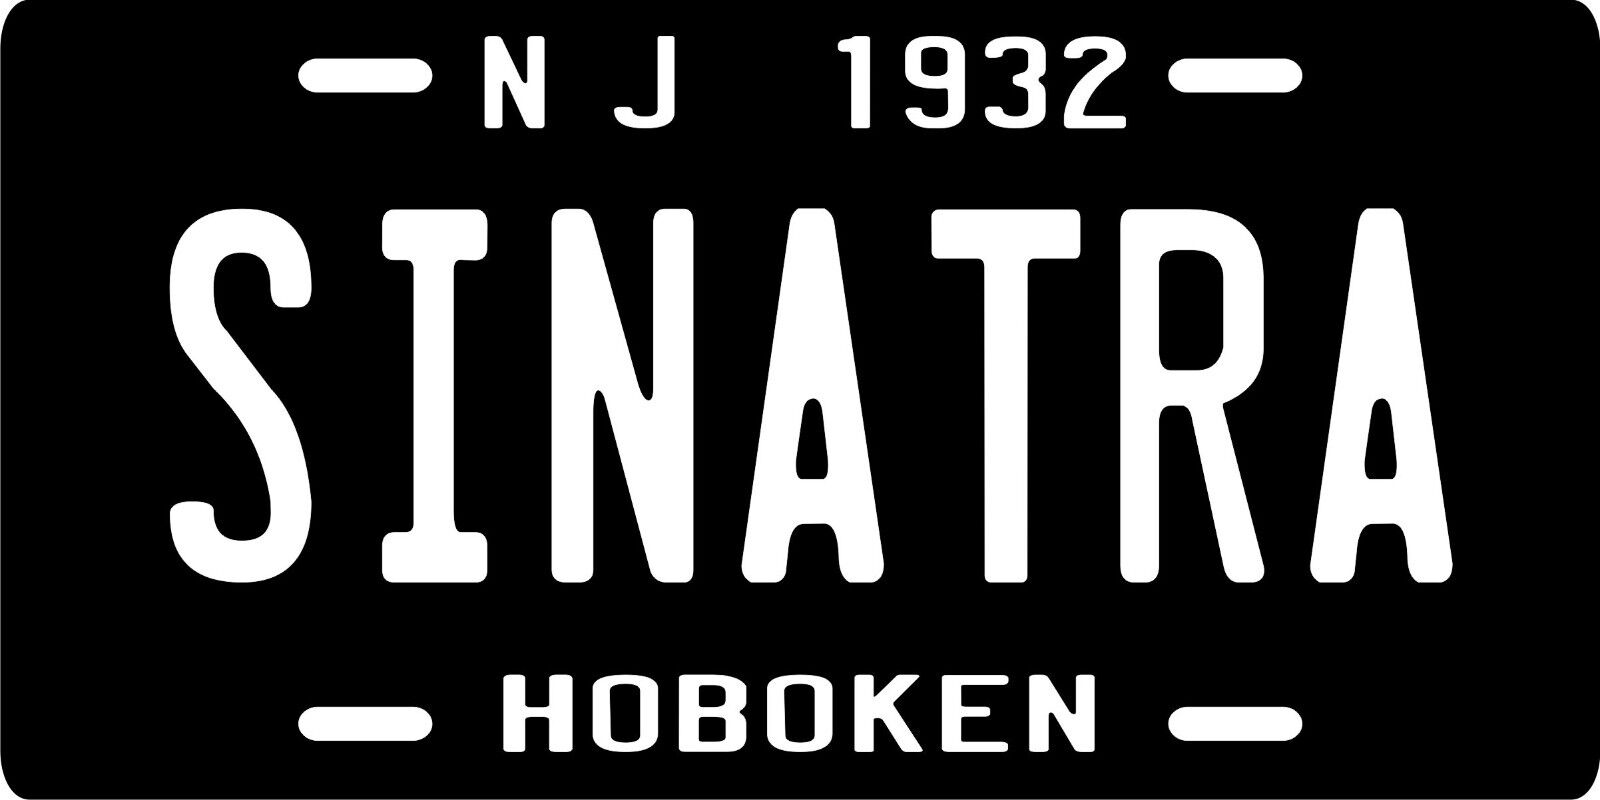 Frank Sinatra Rat Pack 1932 Hoboken New Jersey License plate